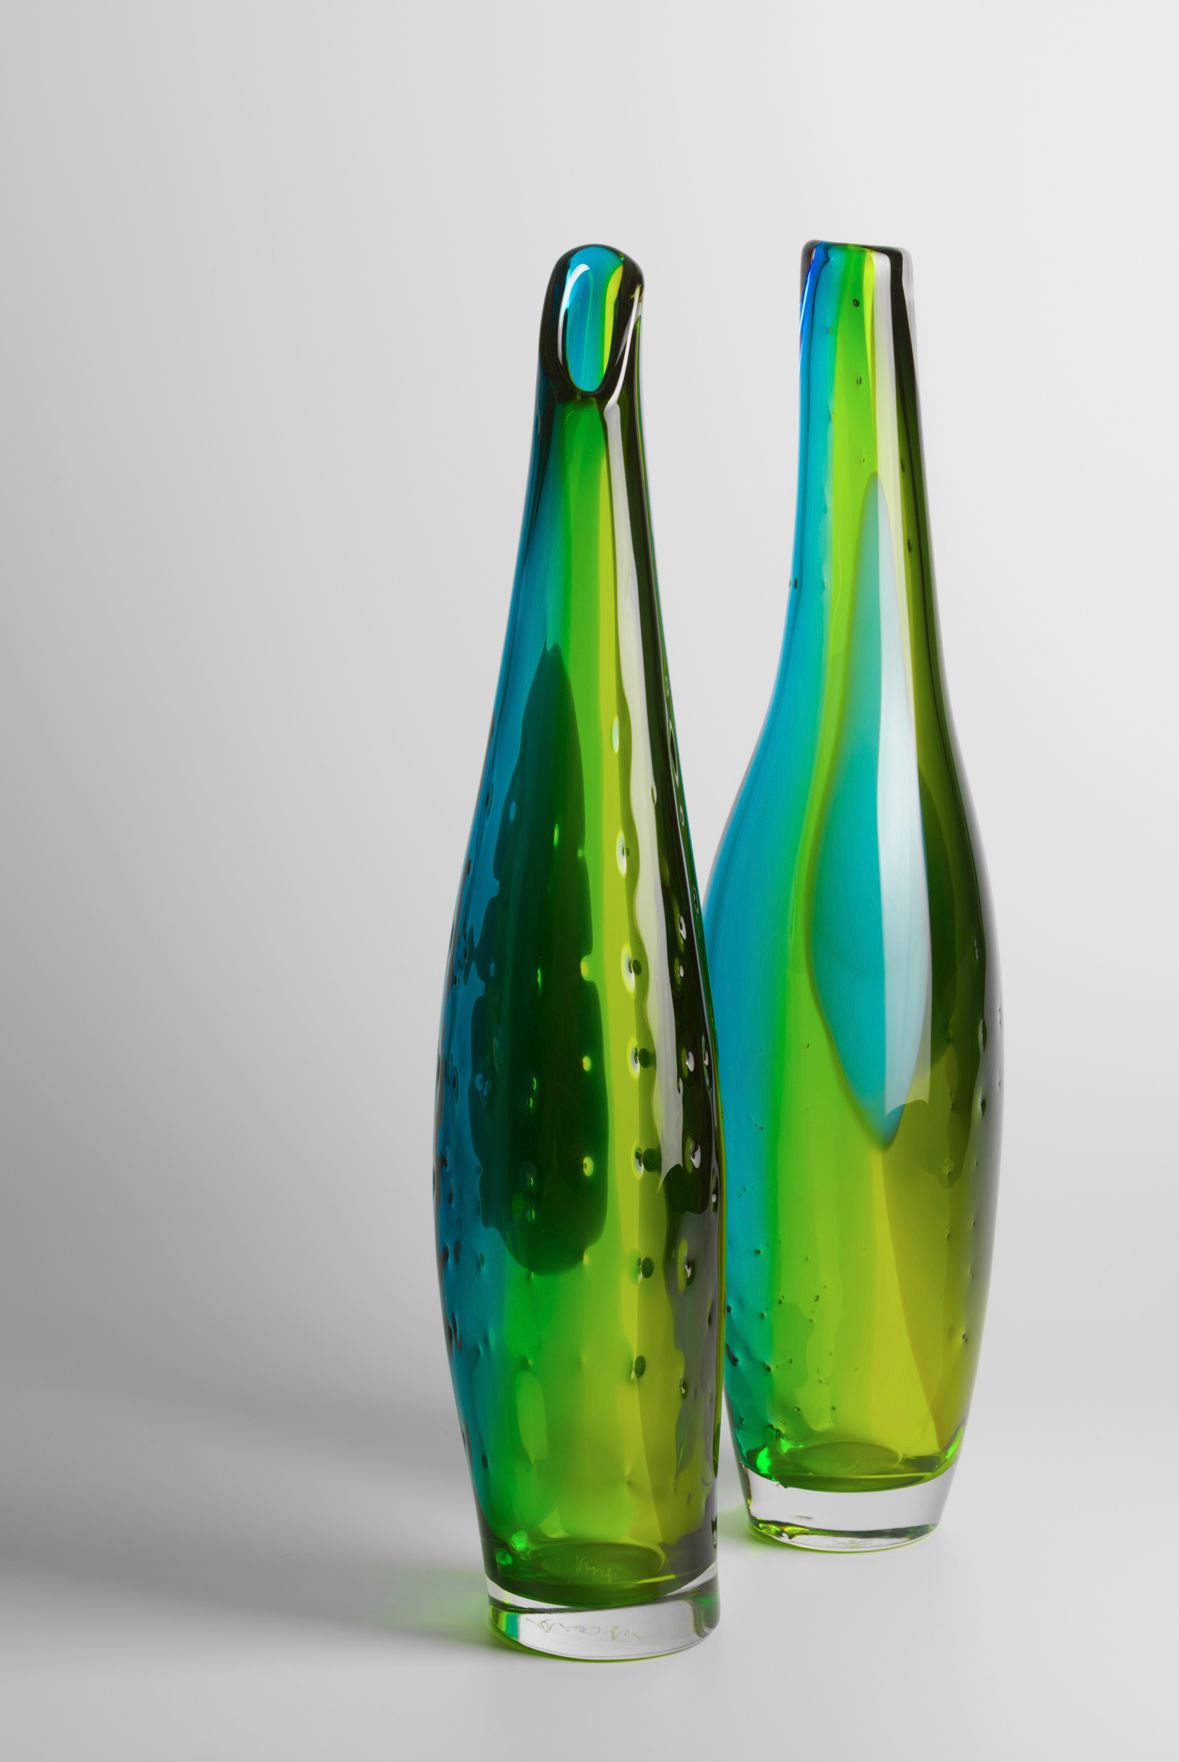 Bespoke Handblown glass made in the UK by Stewart Hearn